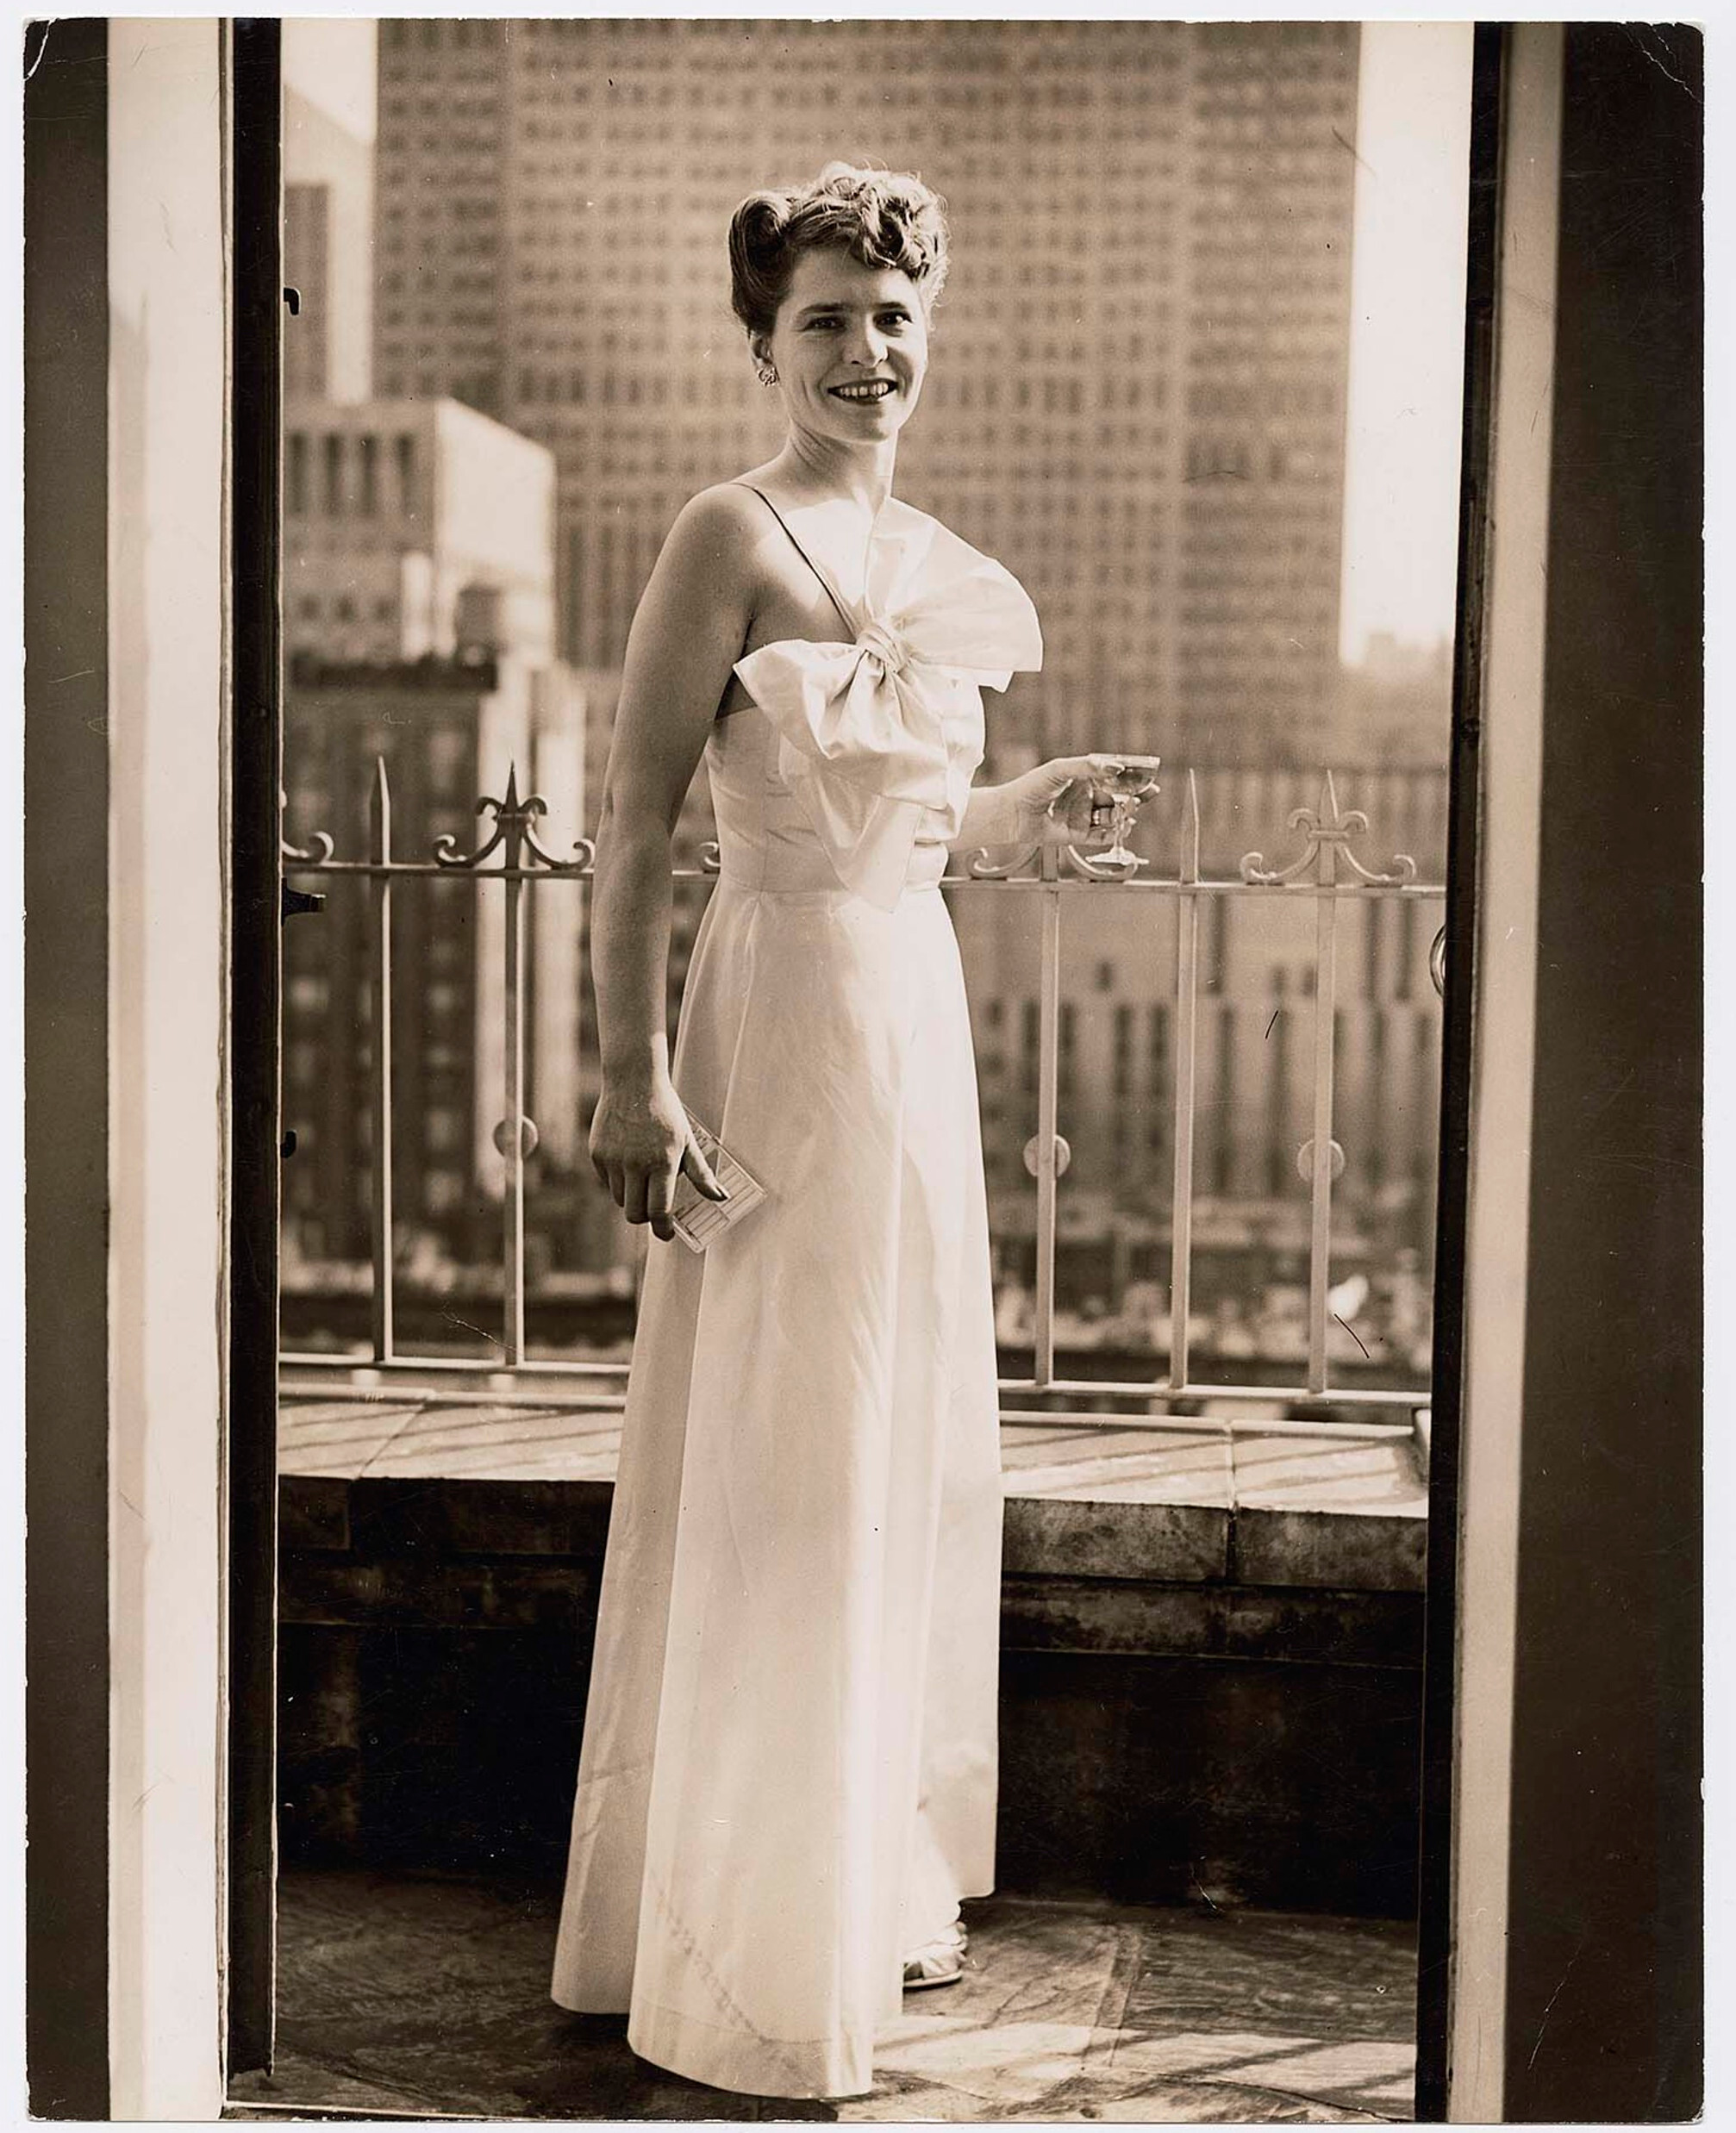 Маргарет Бурк-Уайт, 1943 год. Фотограф Альфред Эйзенштадт